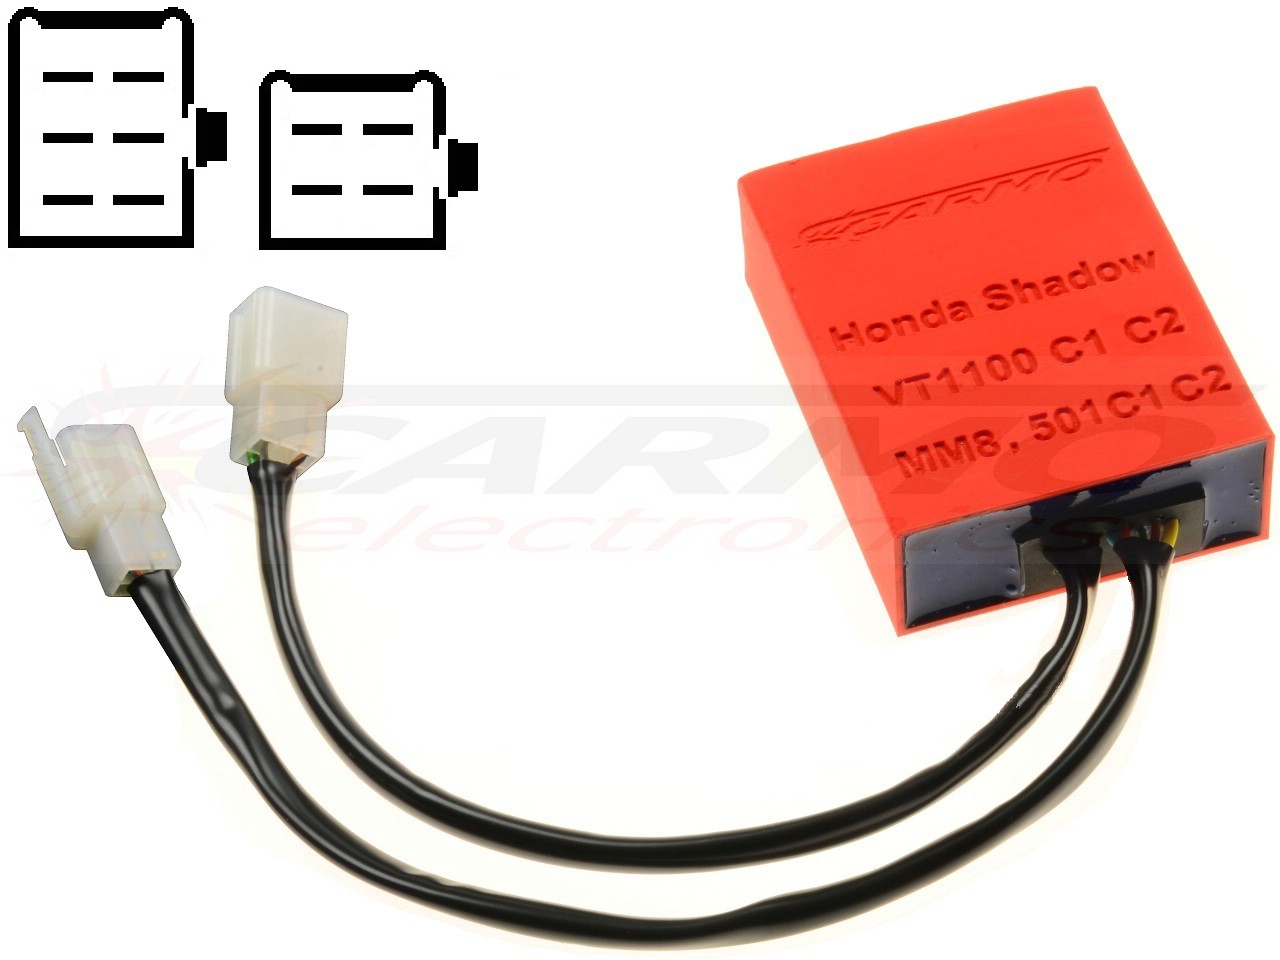 Honda VT1100 C1 C2 igniter ignition module CDI TCI Box (MM8, 501C1, 501C2) - Clique na Imagem para Fechar